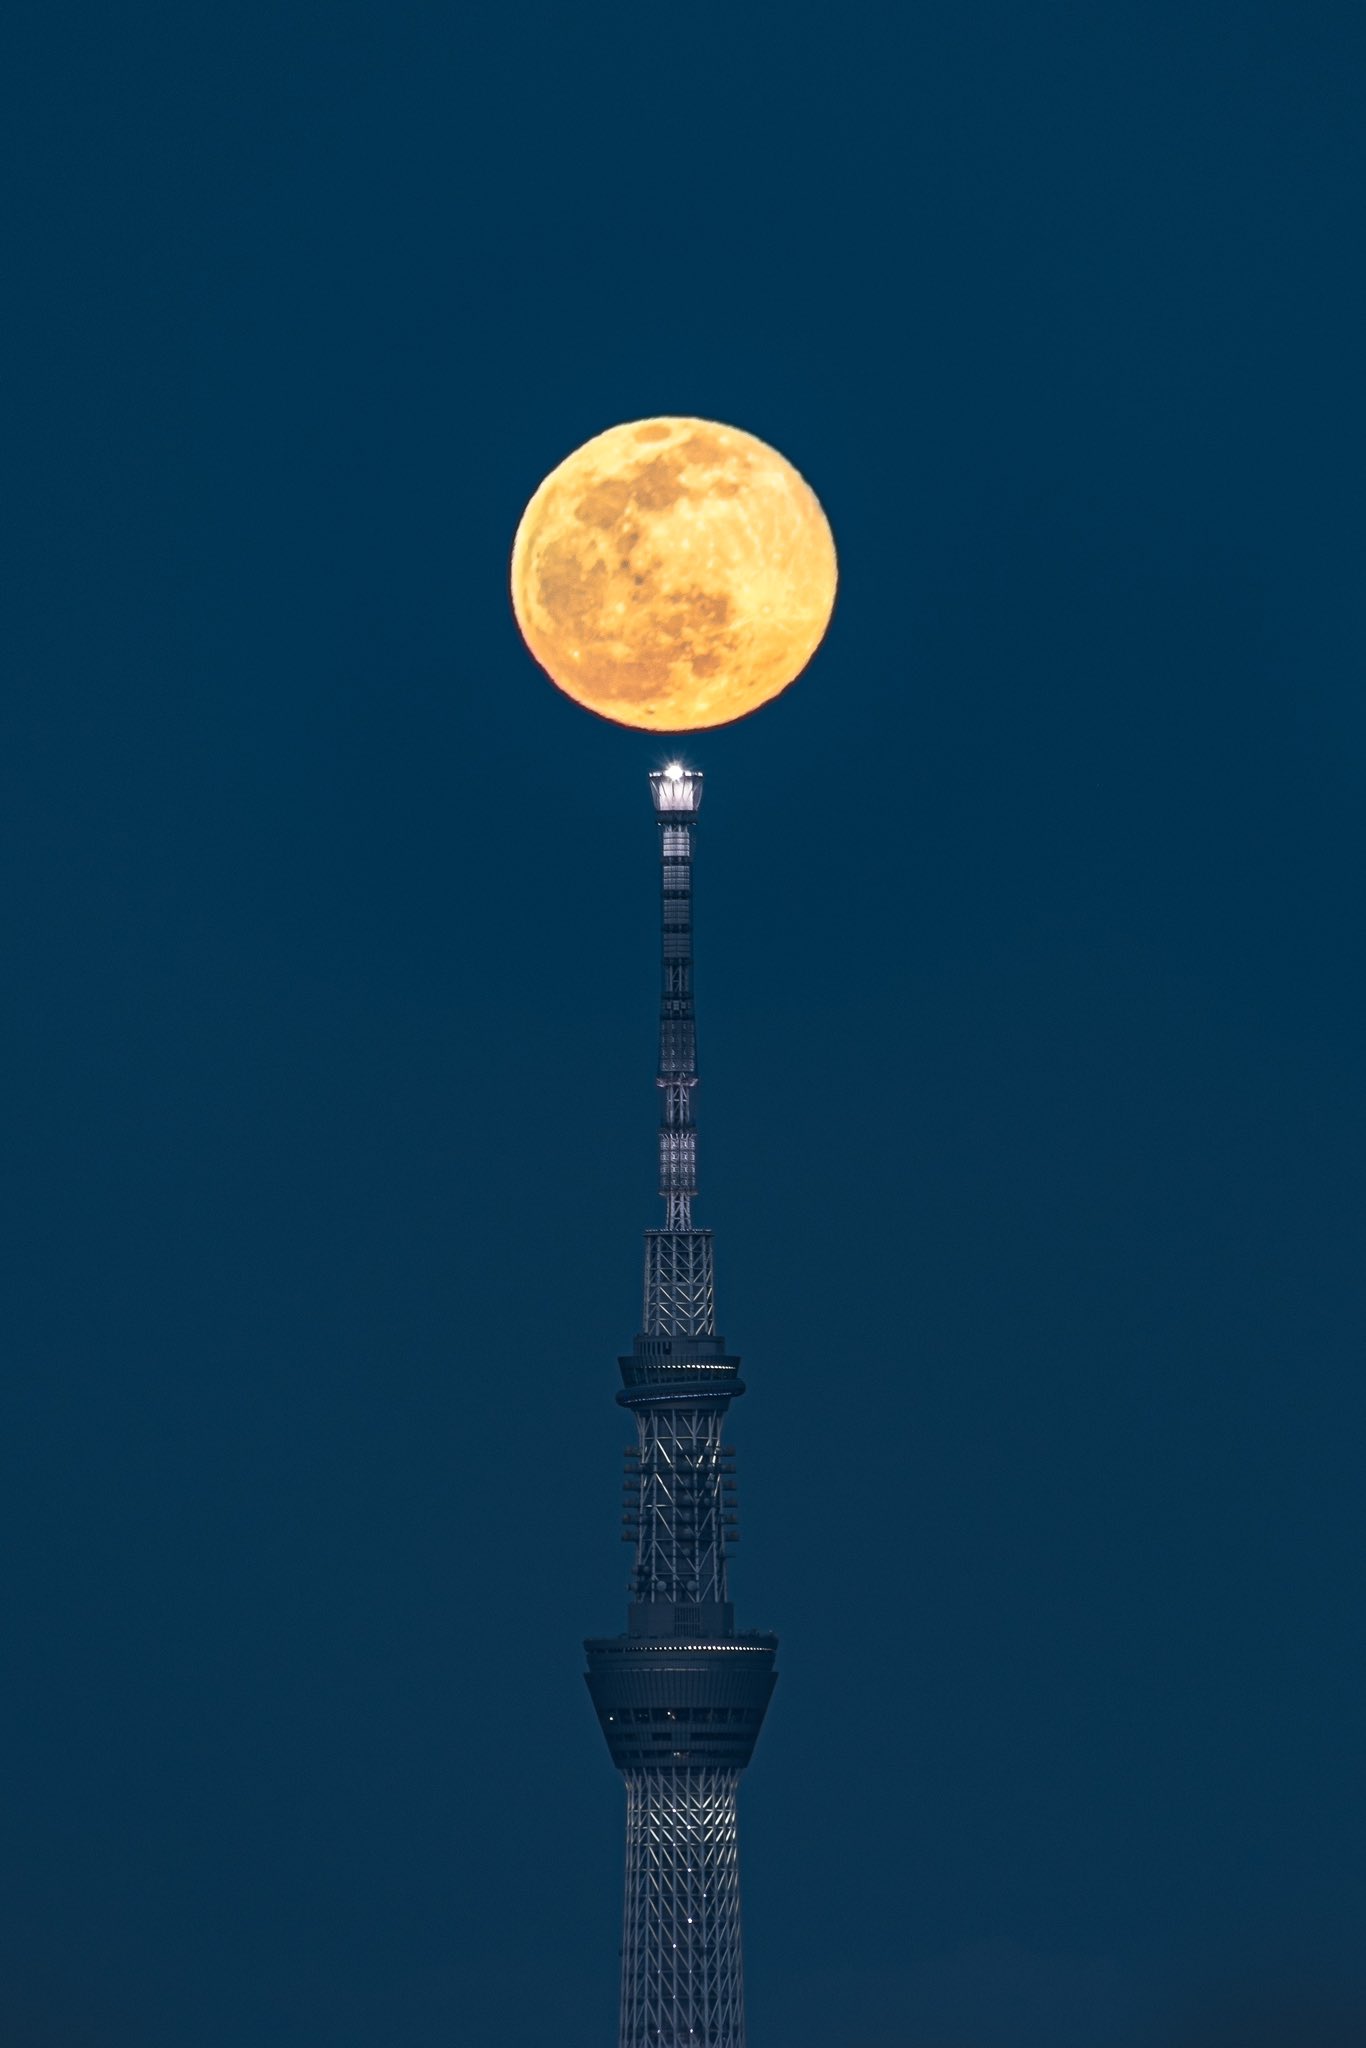 Szuna 満月の日なので今まで撮った満月の写真を見てください T Co Uizflkcyzo Twitter